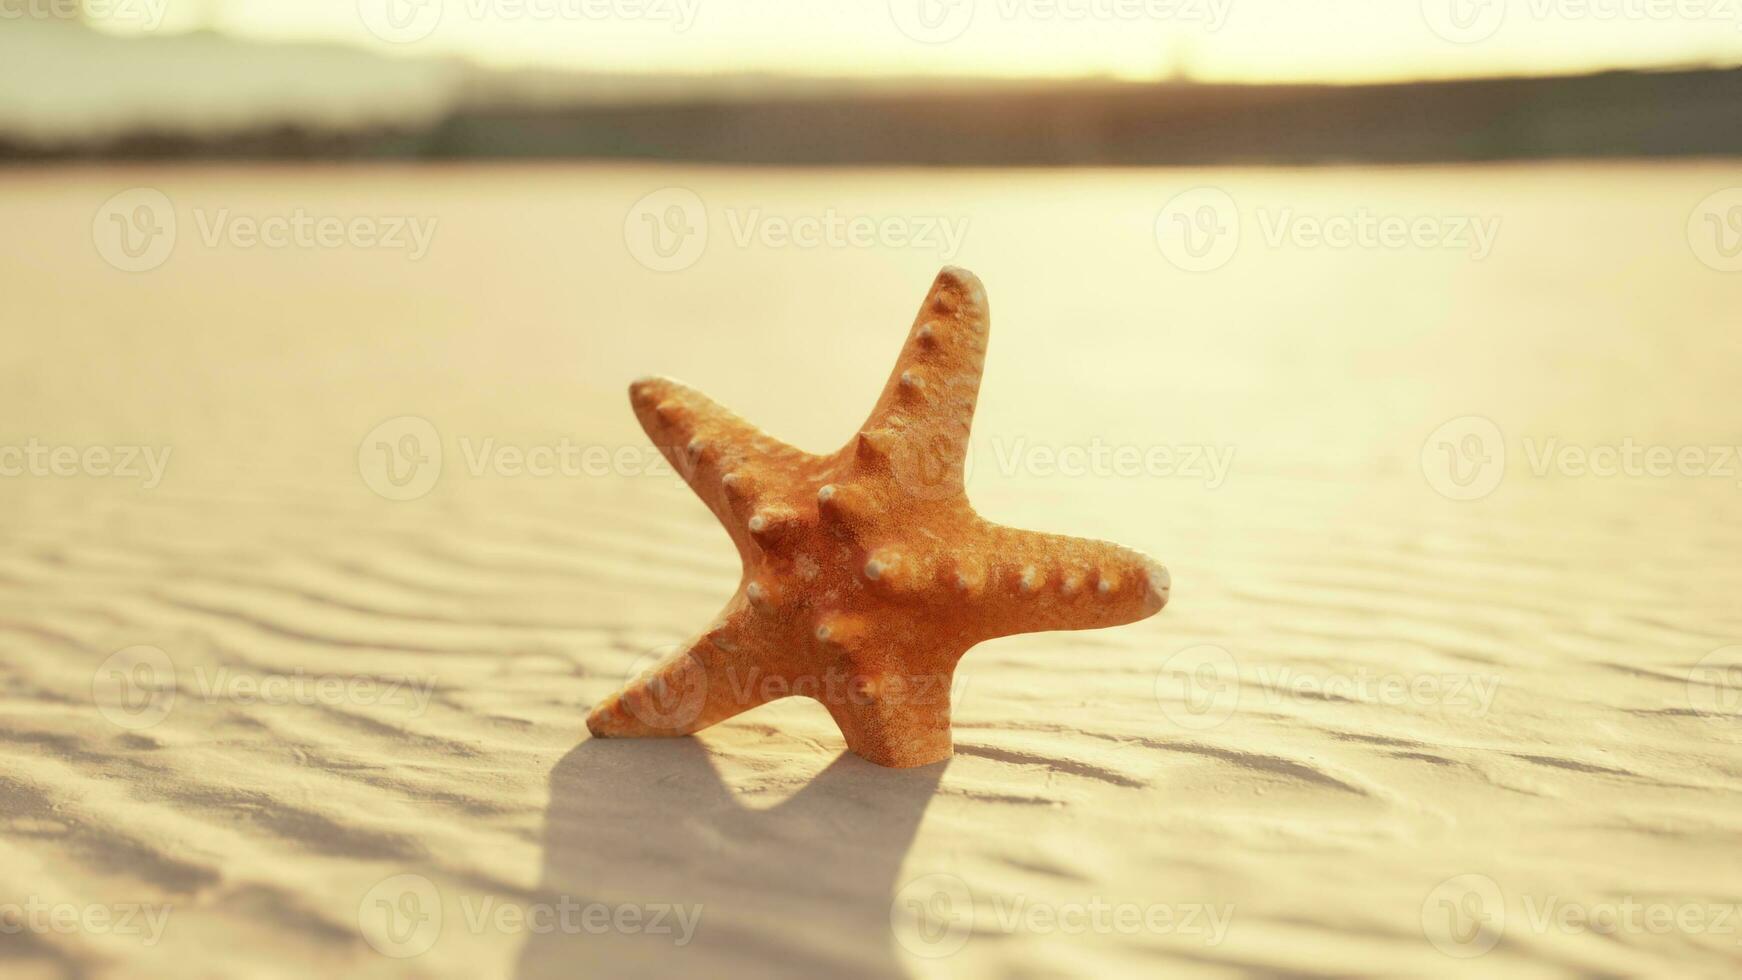 starfish on the sity beach photo